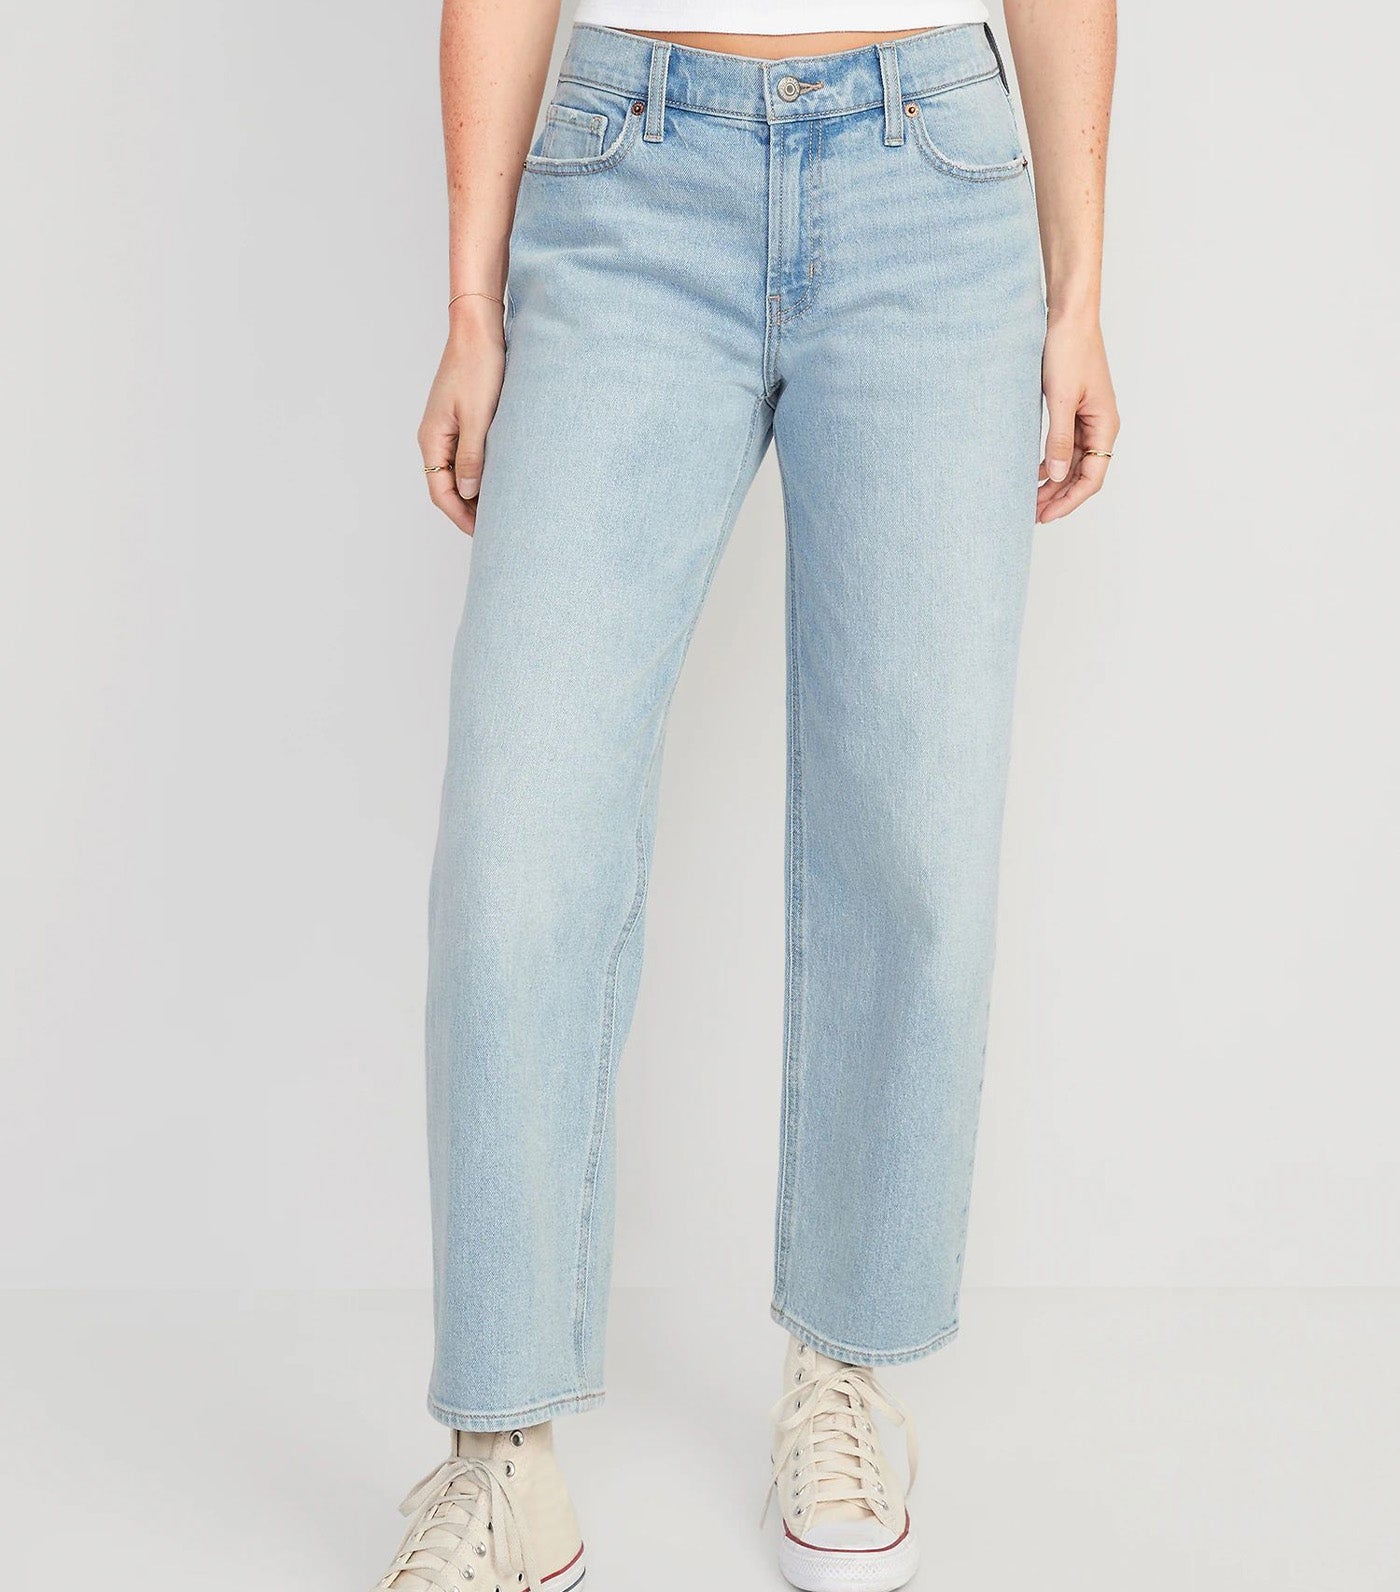 Mid-Rise Boyfriend Jeans for Women Vintage Worn